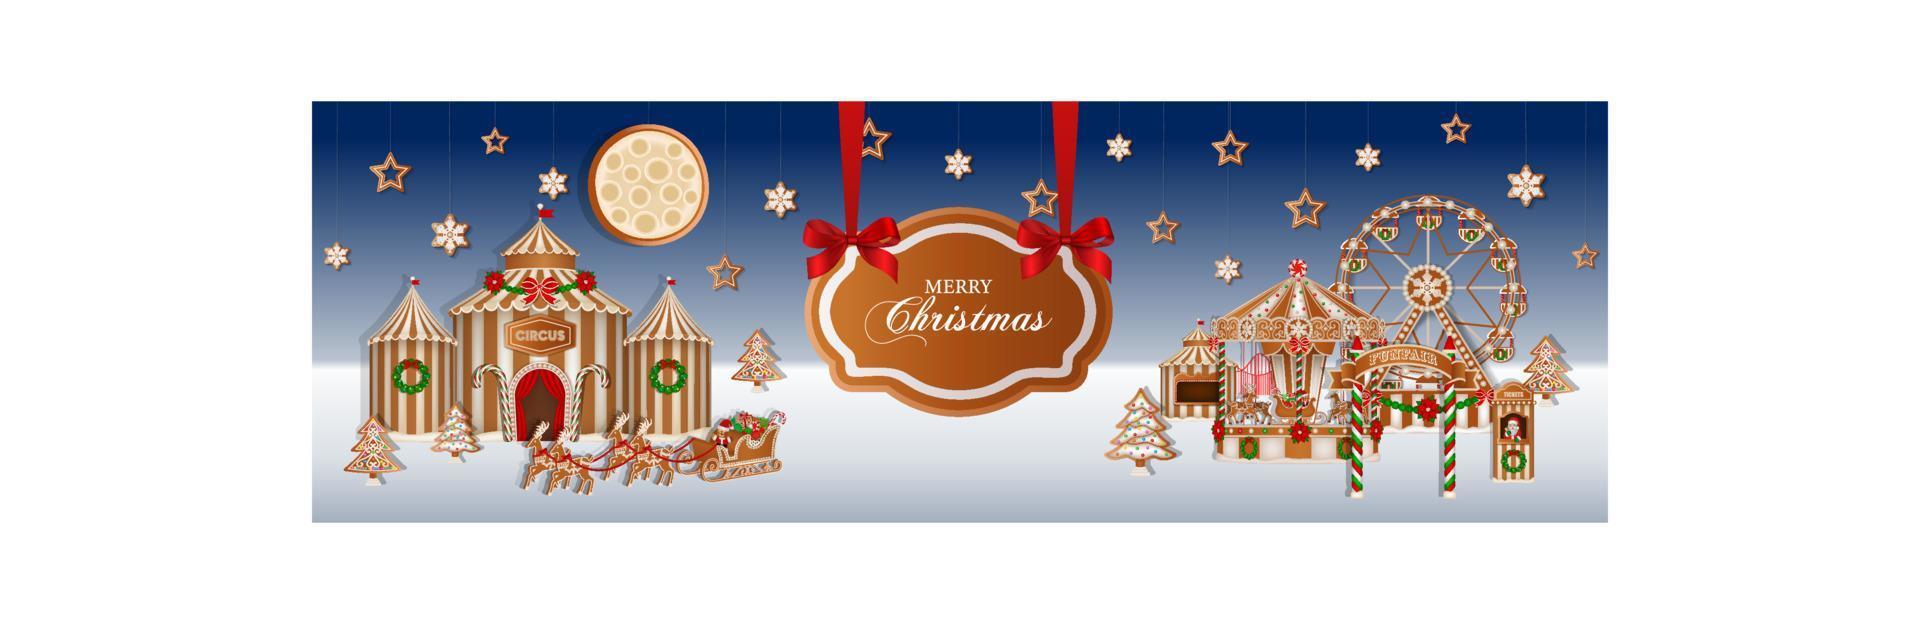 pancarta navideña con iglesia de pan de jengibre. fondo de navidad con galletas de jengibre y dulces vector